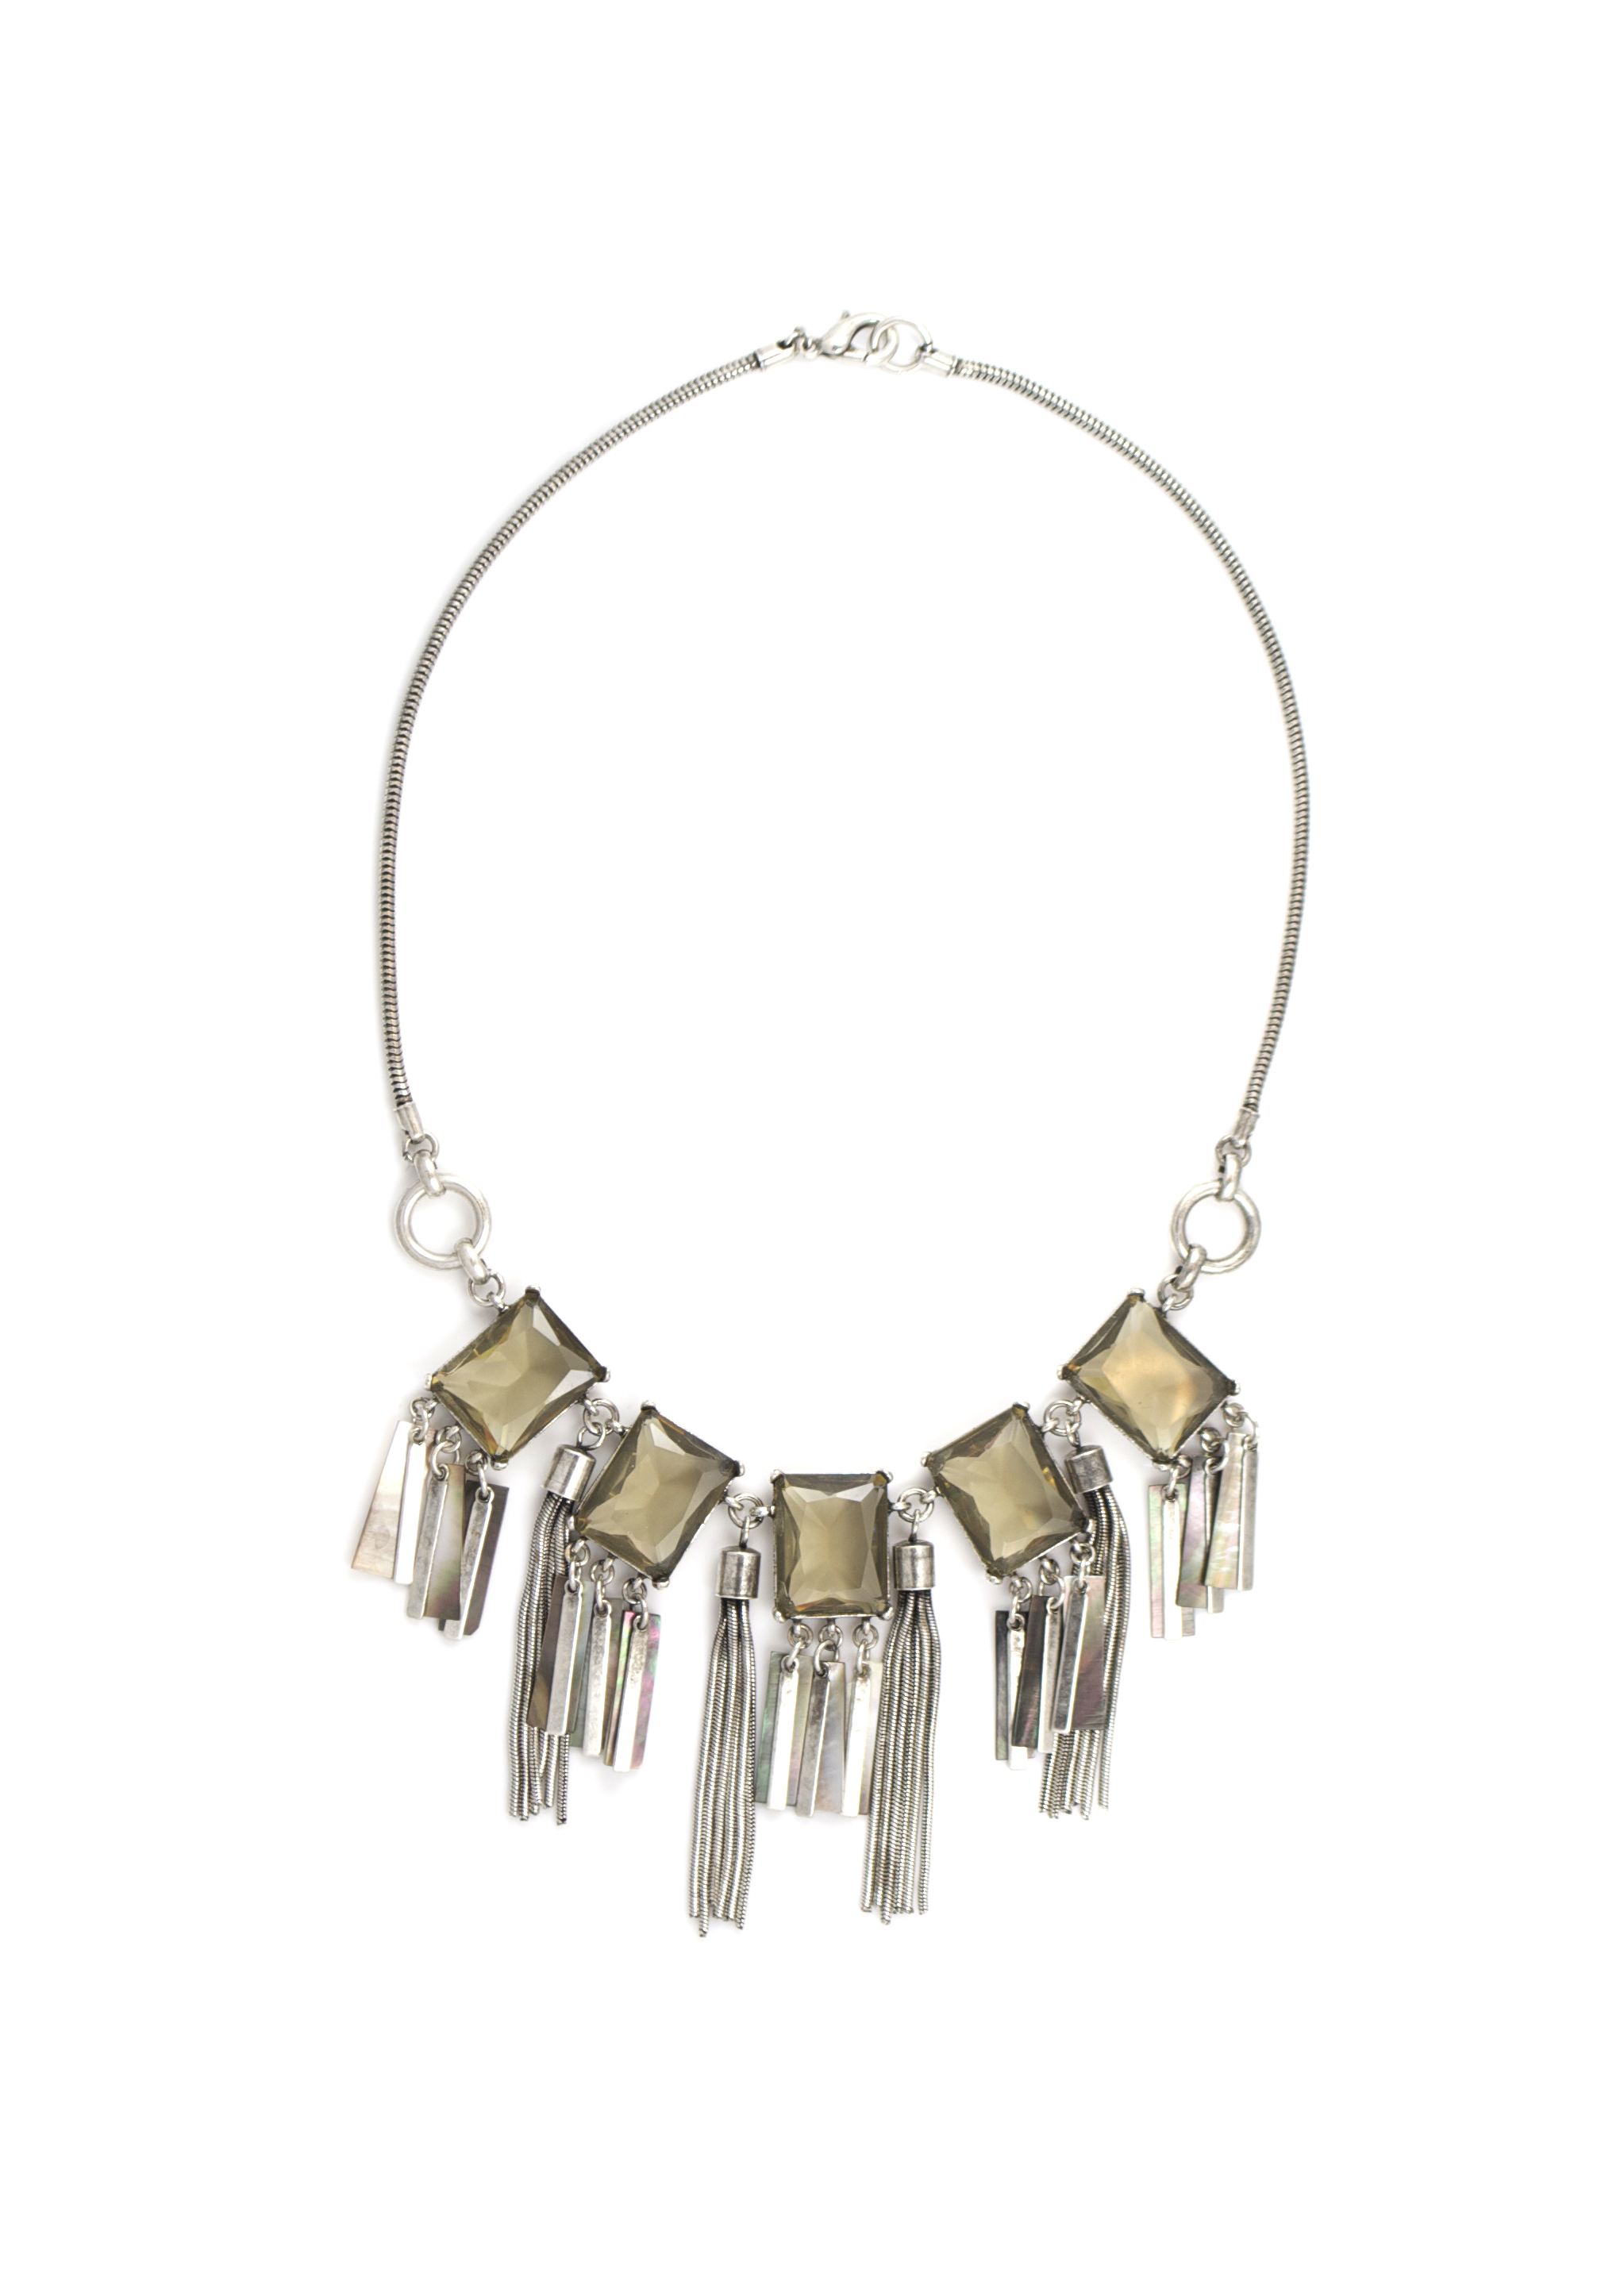  Smokey Shimmer necklace, available at  Gerard Yosca .&nbsp; 